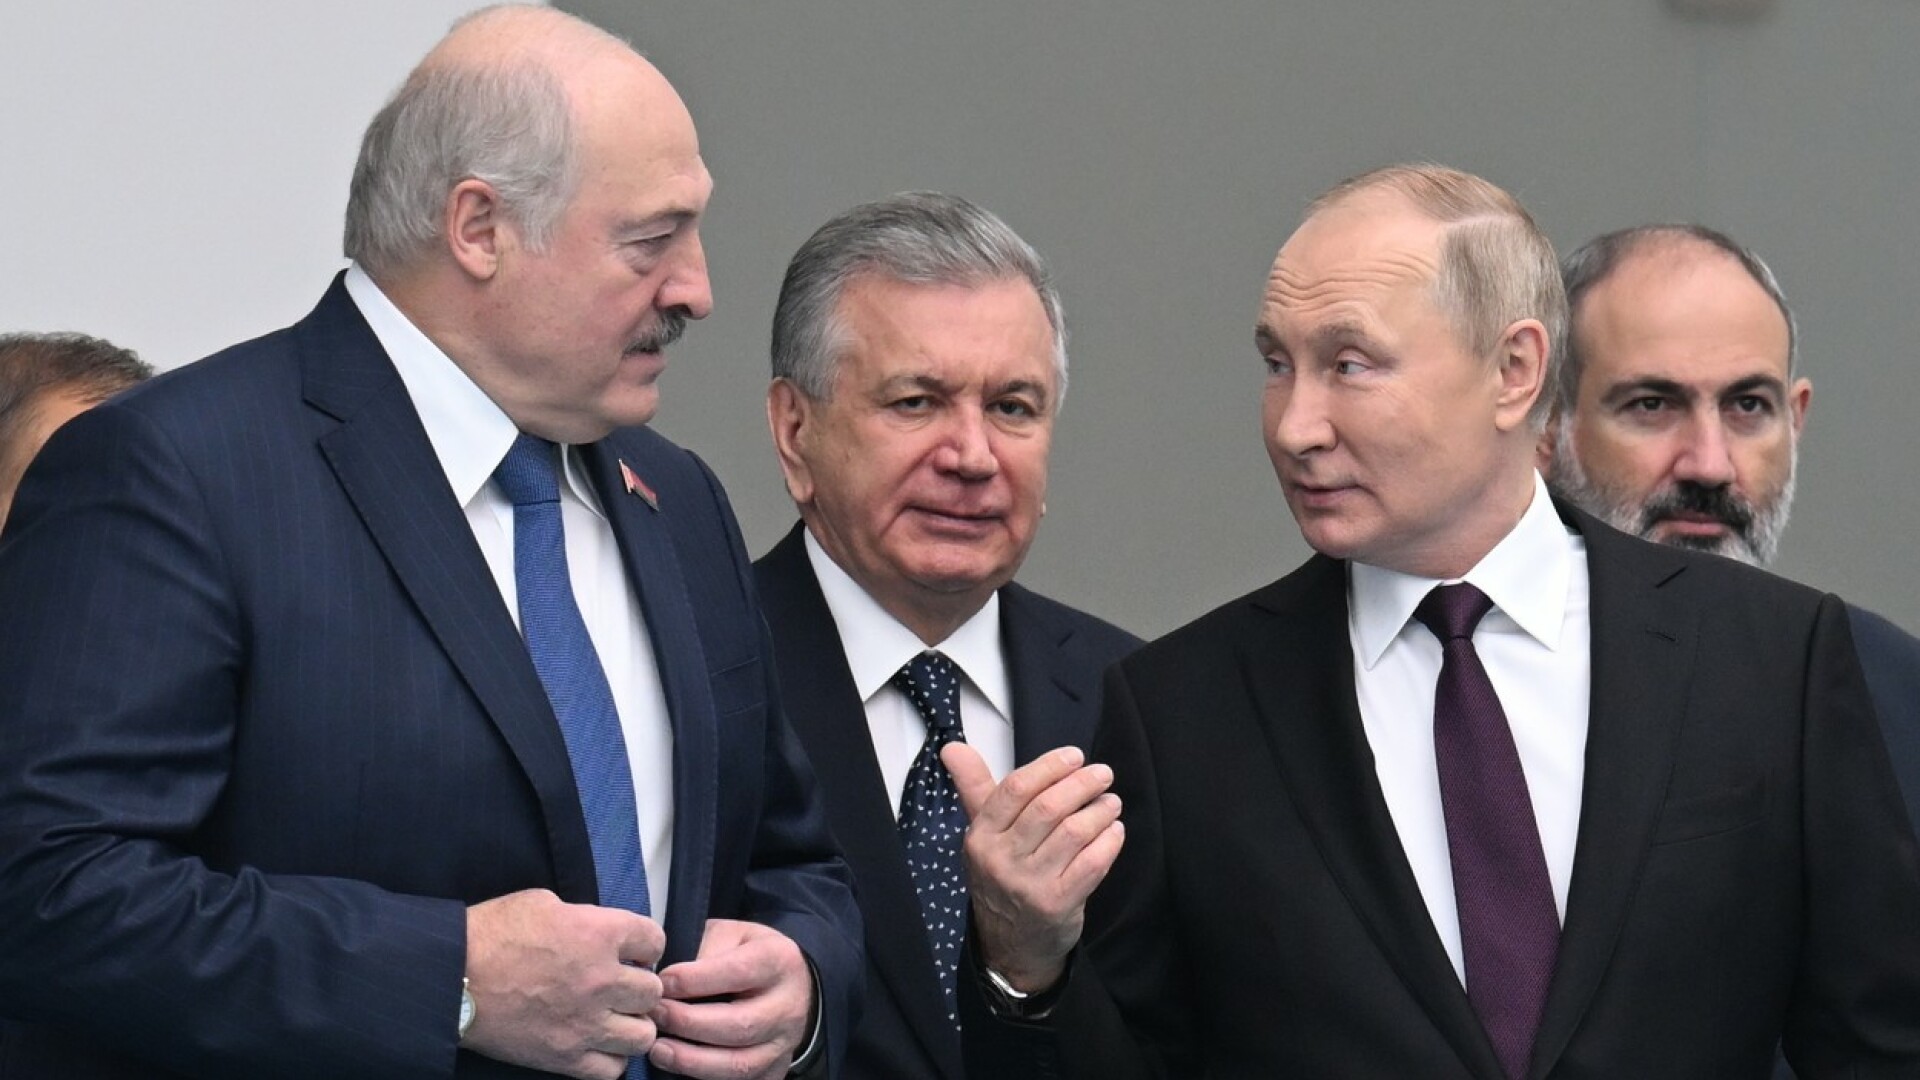 Putin și Lukashenko